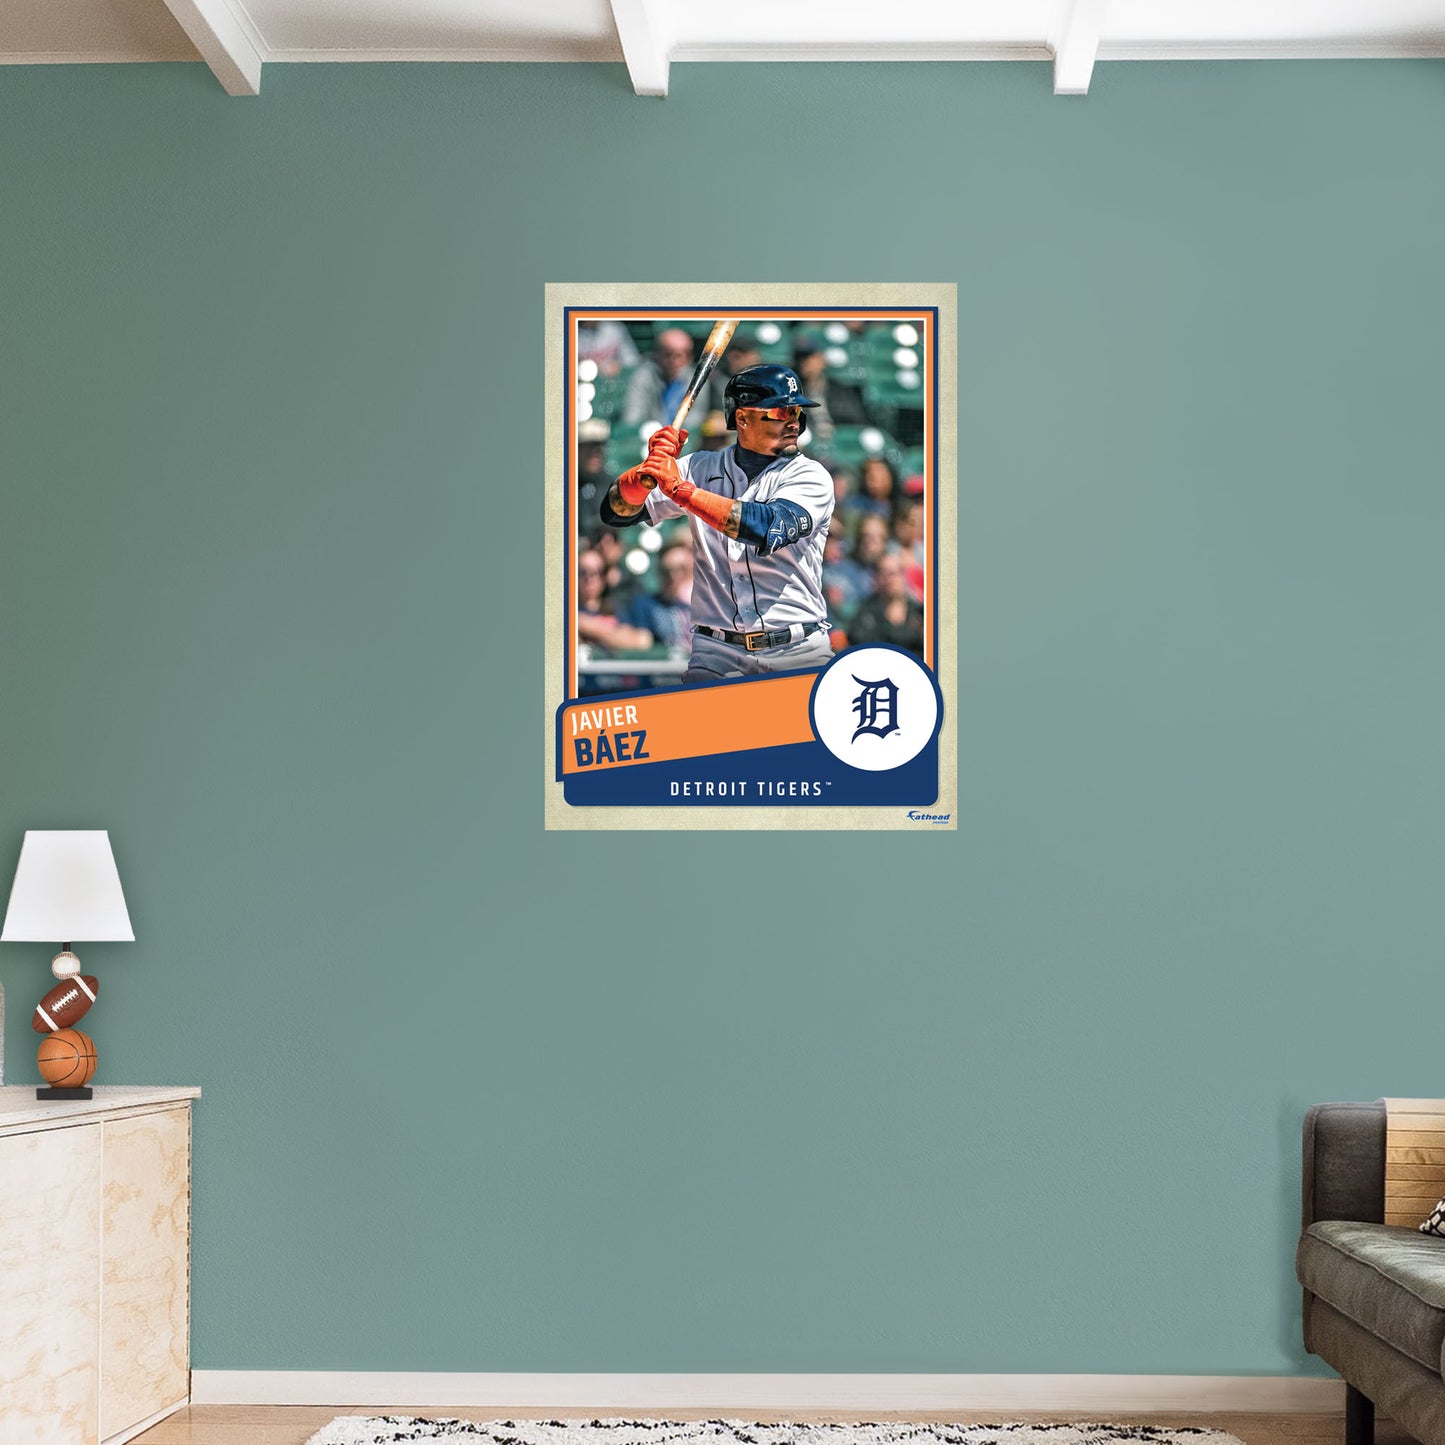 Detroit Tigers: Javier Báez 2022 Poster - Officially Licensed MLB